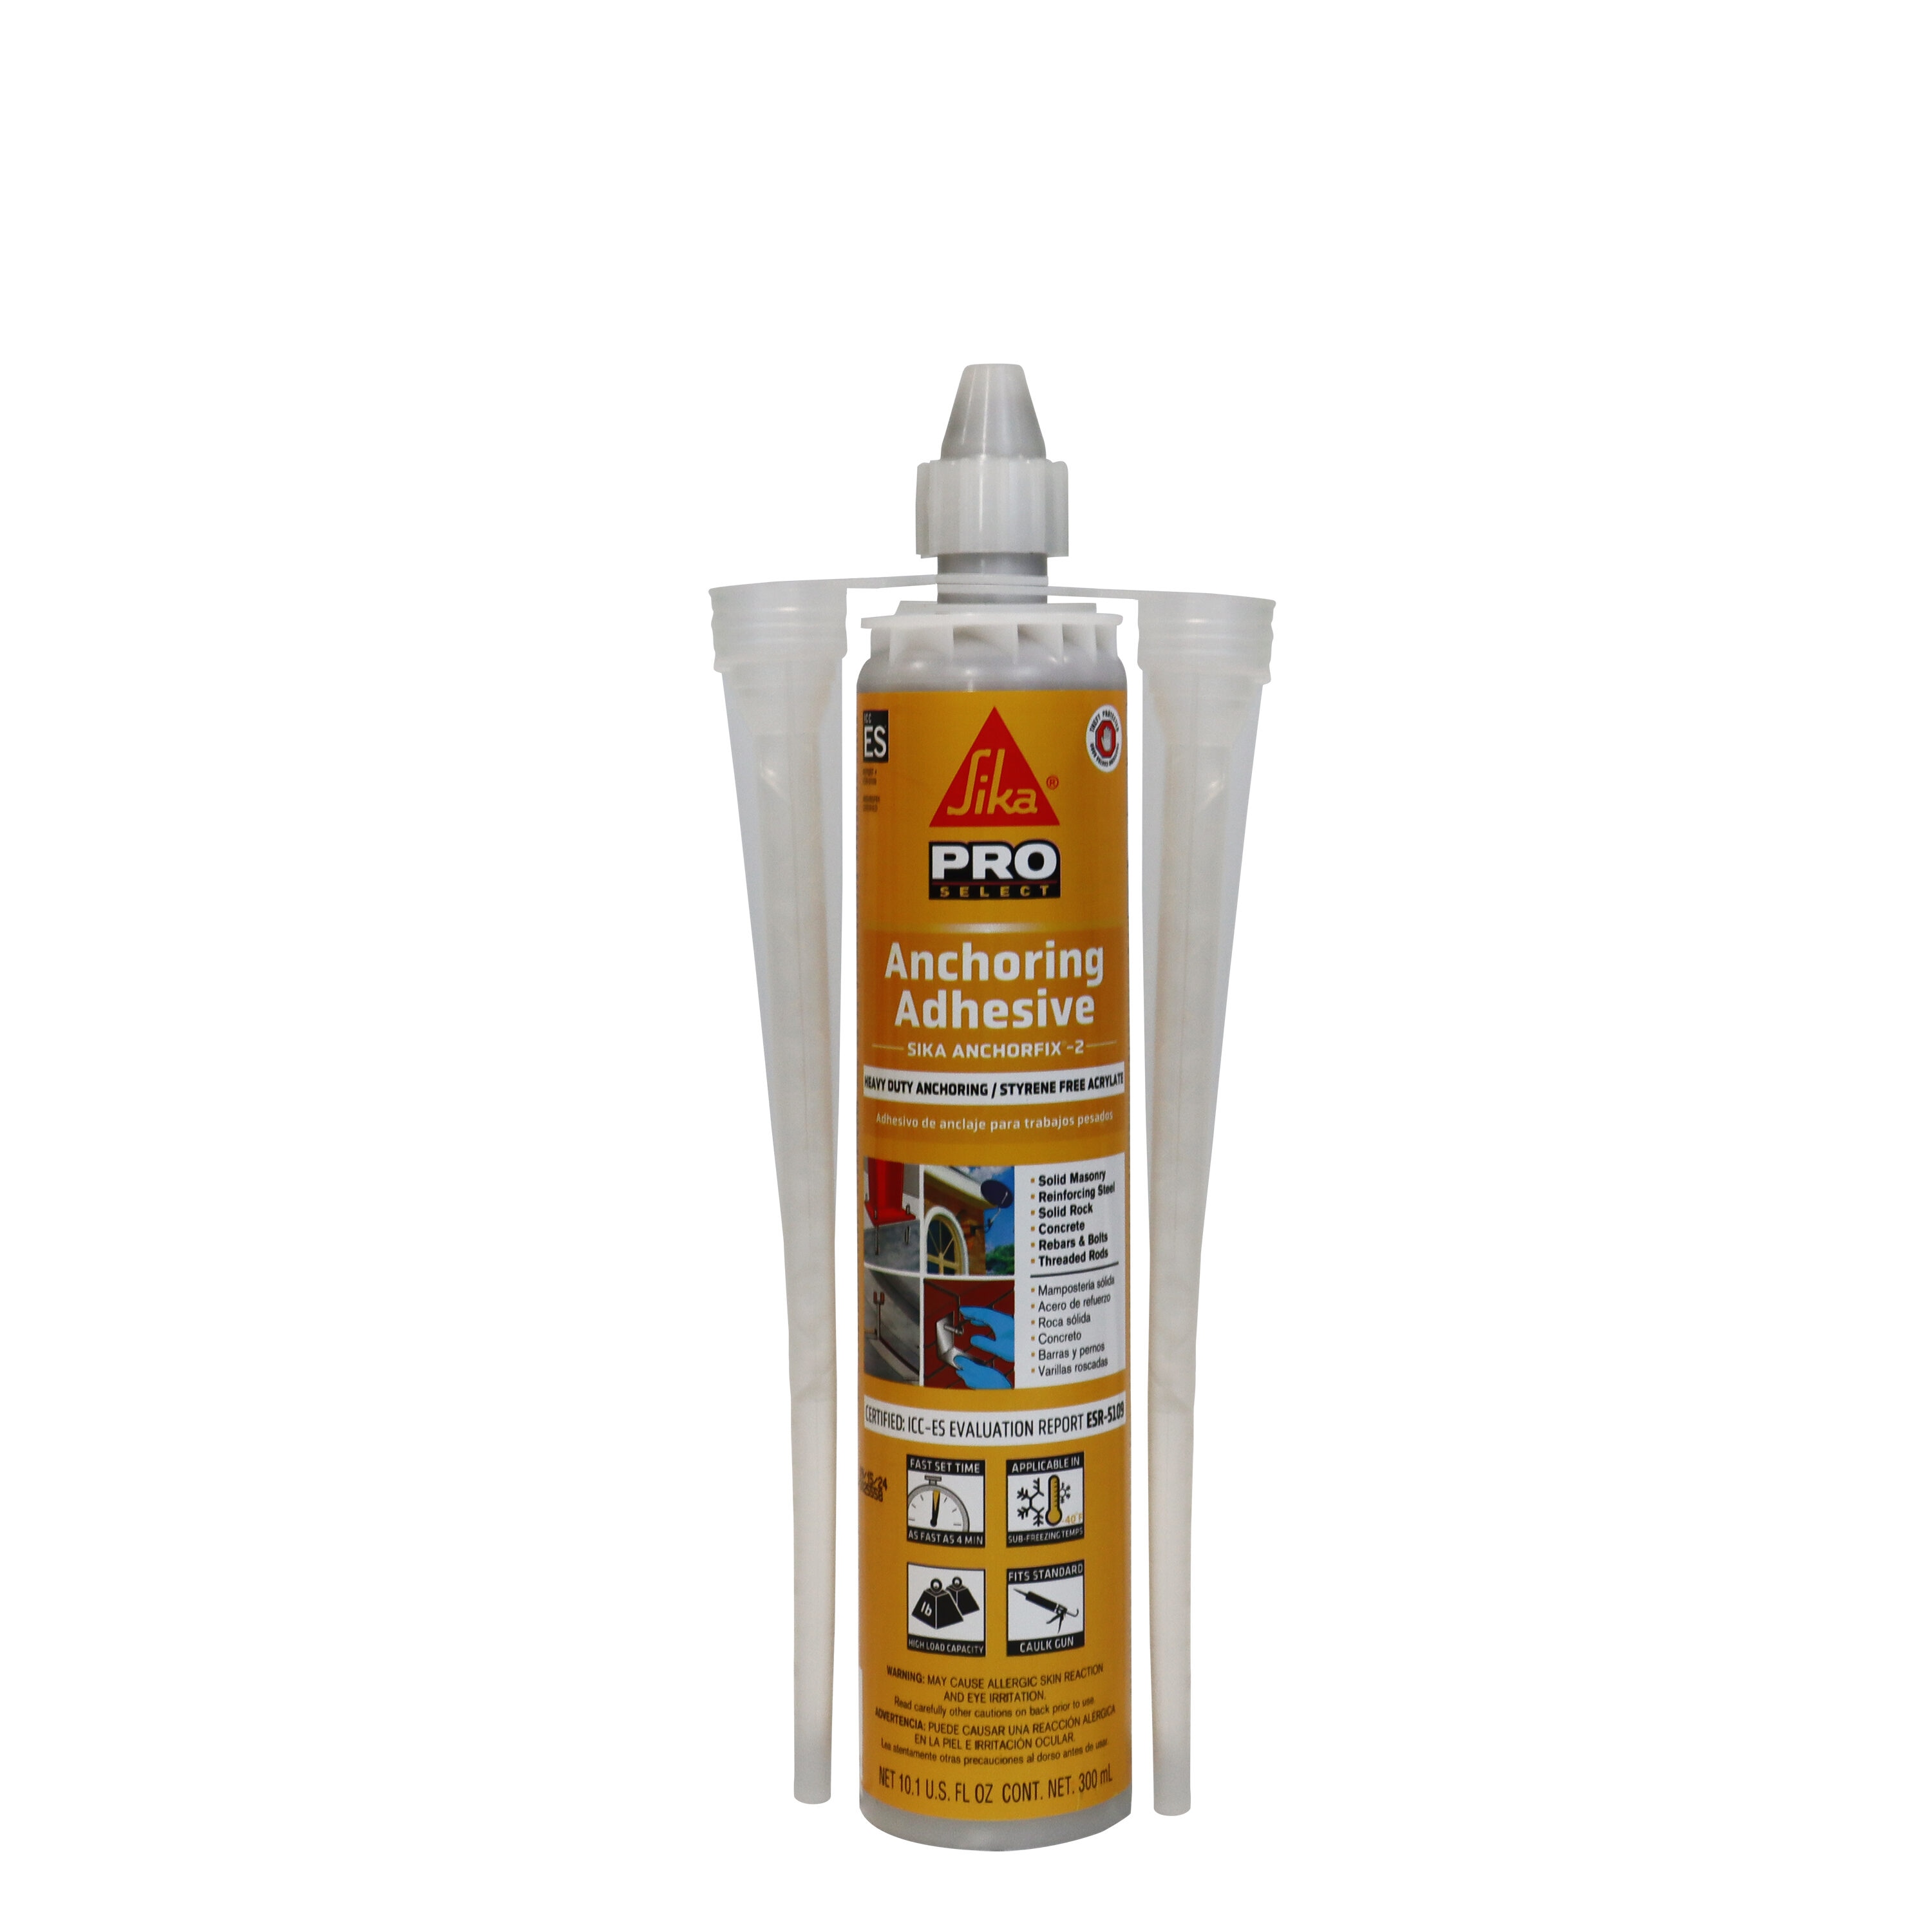 Cement Glue Value Pack Testors 2-7/8 fl oz tubes